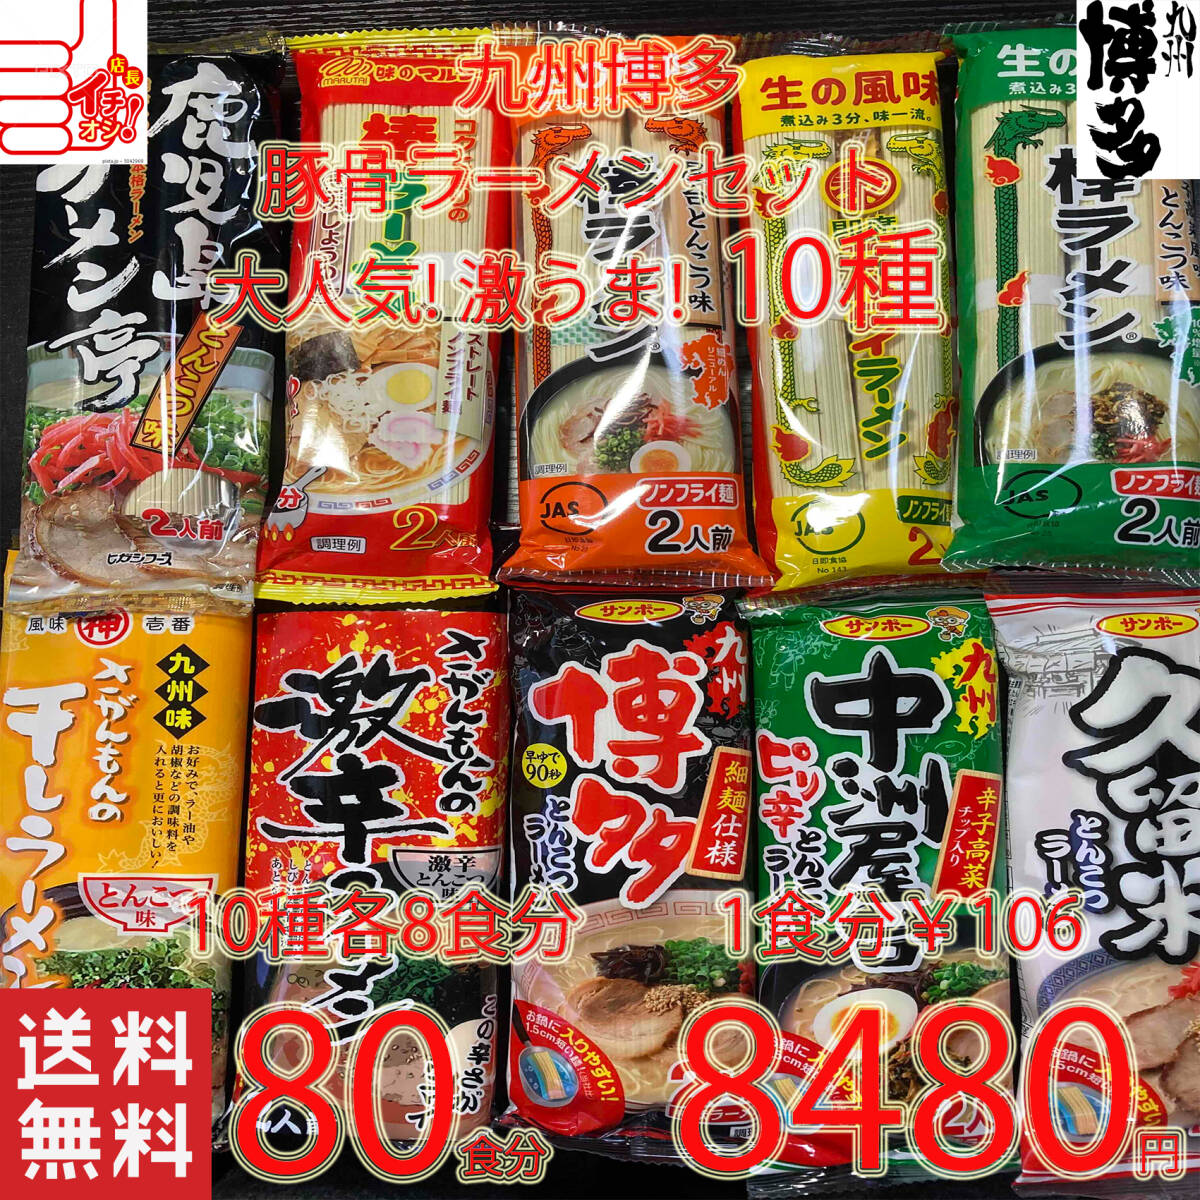  super-discount great popularity ramen Kyushu Hakata pig . ramen set 10 kind recommendation set nationwide free shipping Kyushu Hakata 41380